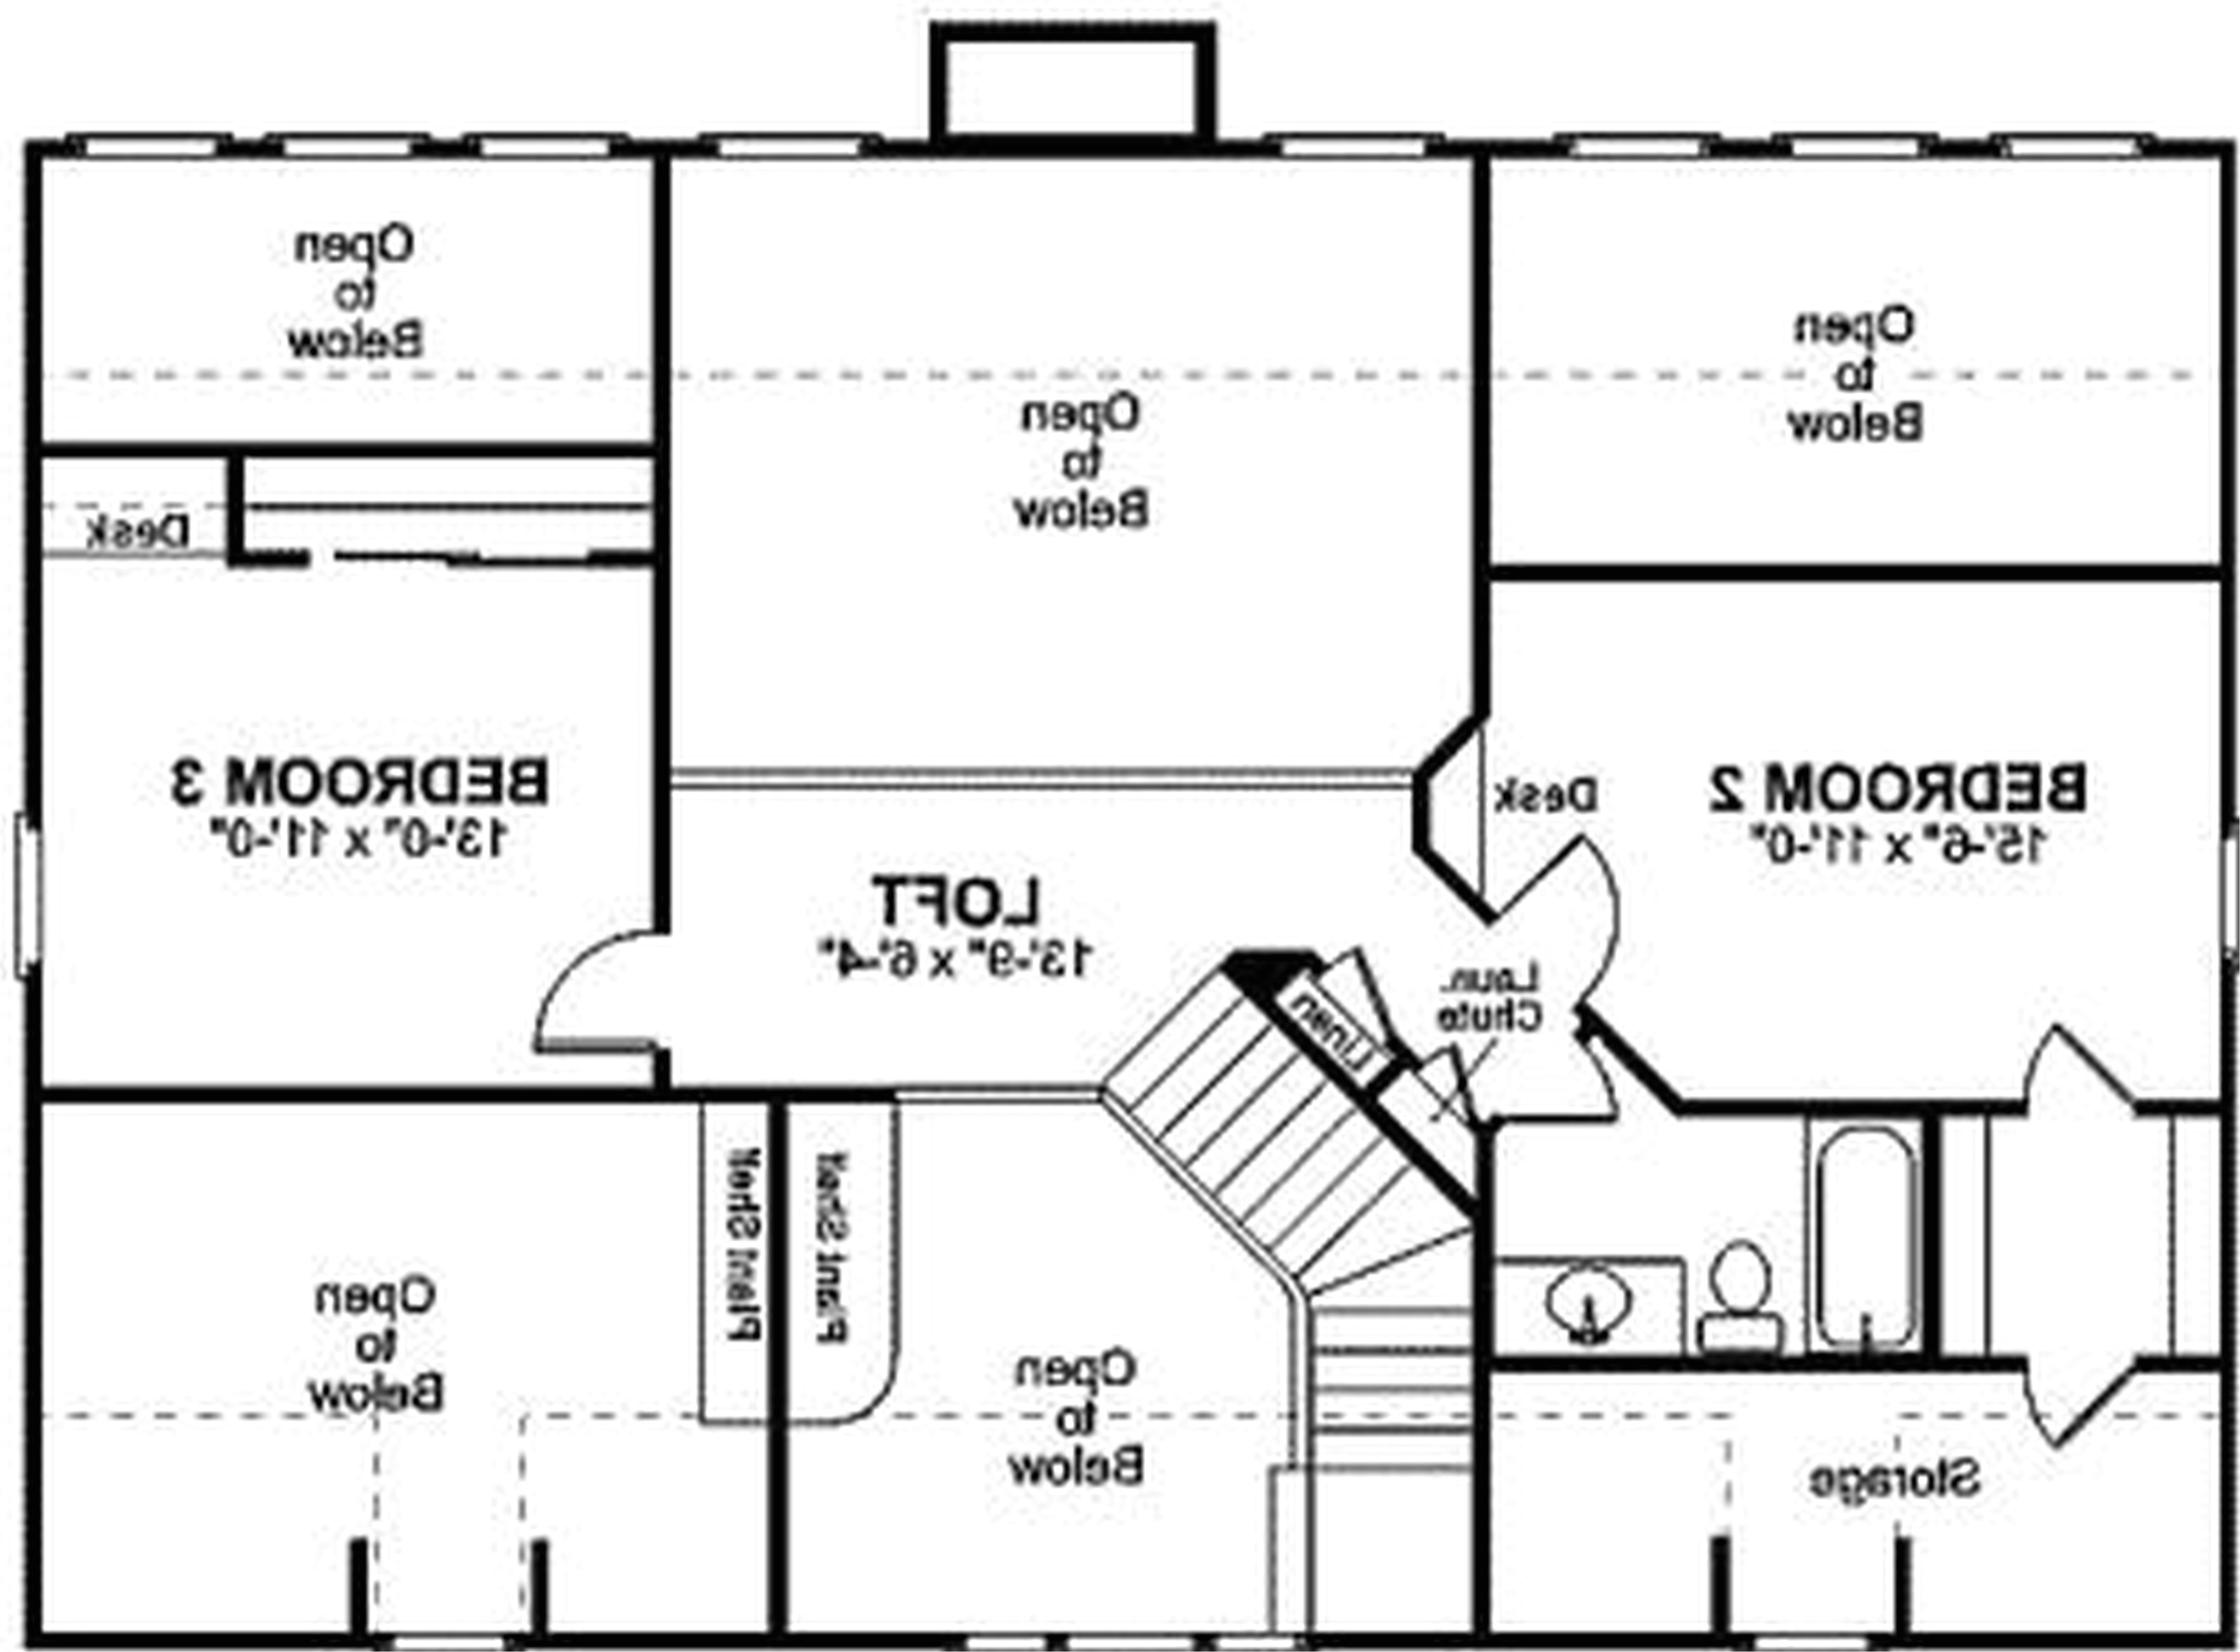 design your own home free tritmonk floor plan home interior design ideas with images dream online designing planner